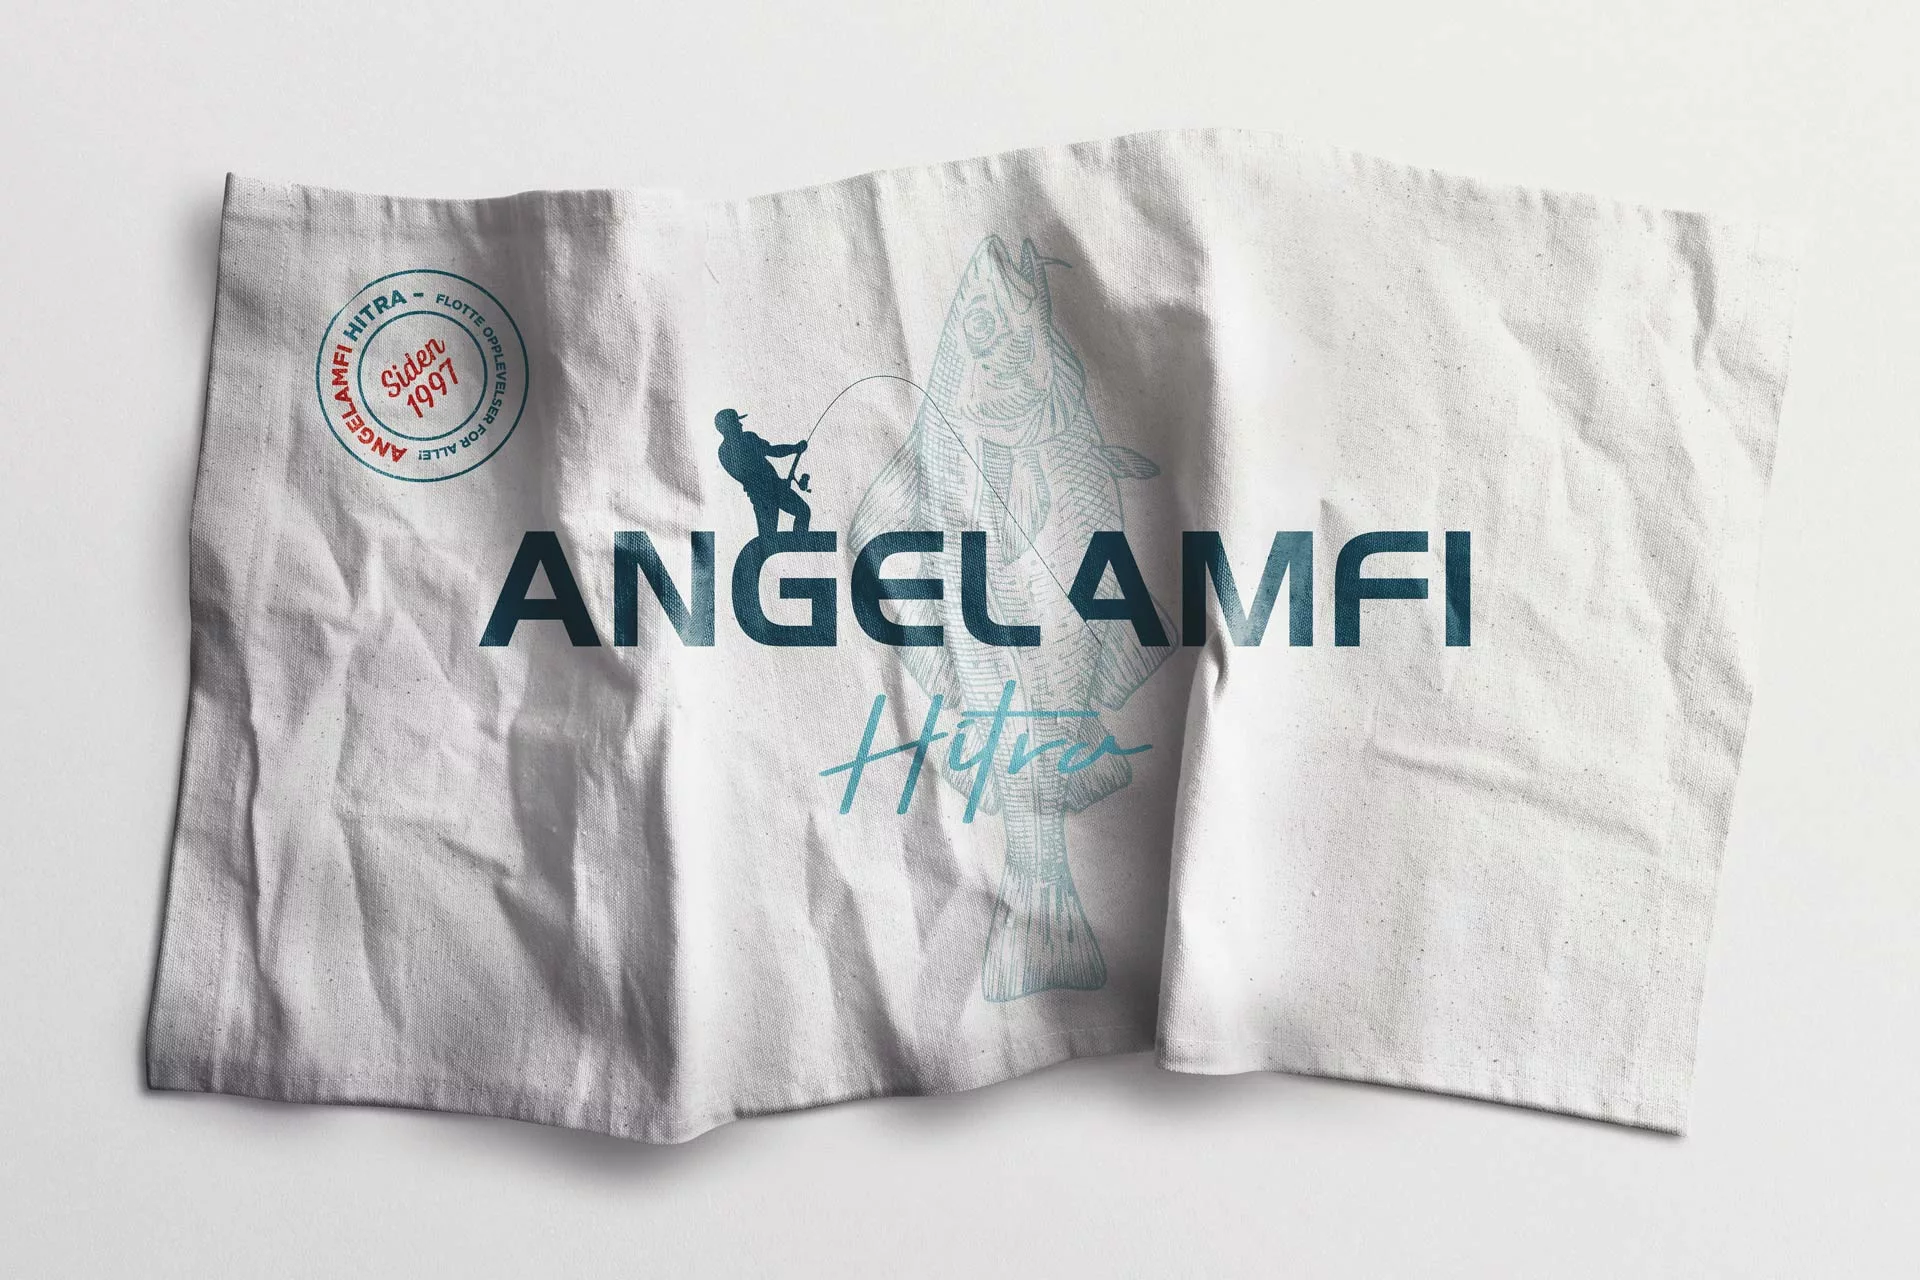 Vinnvinn Reklame Angel Amfi Flag 1